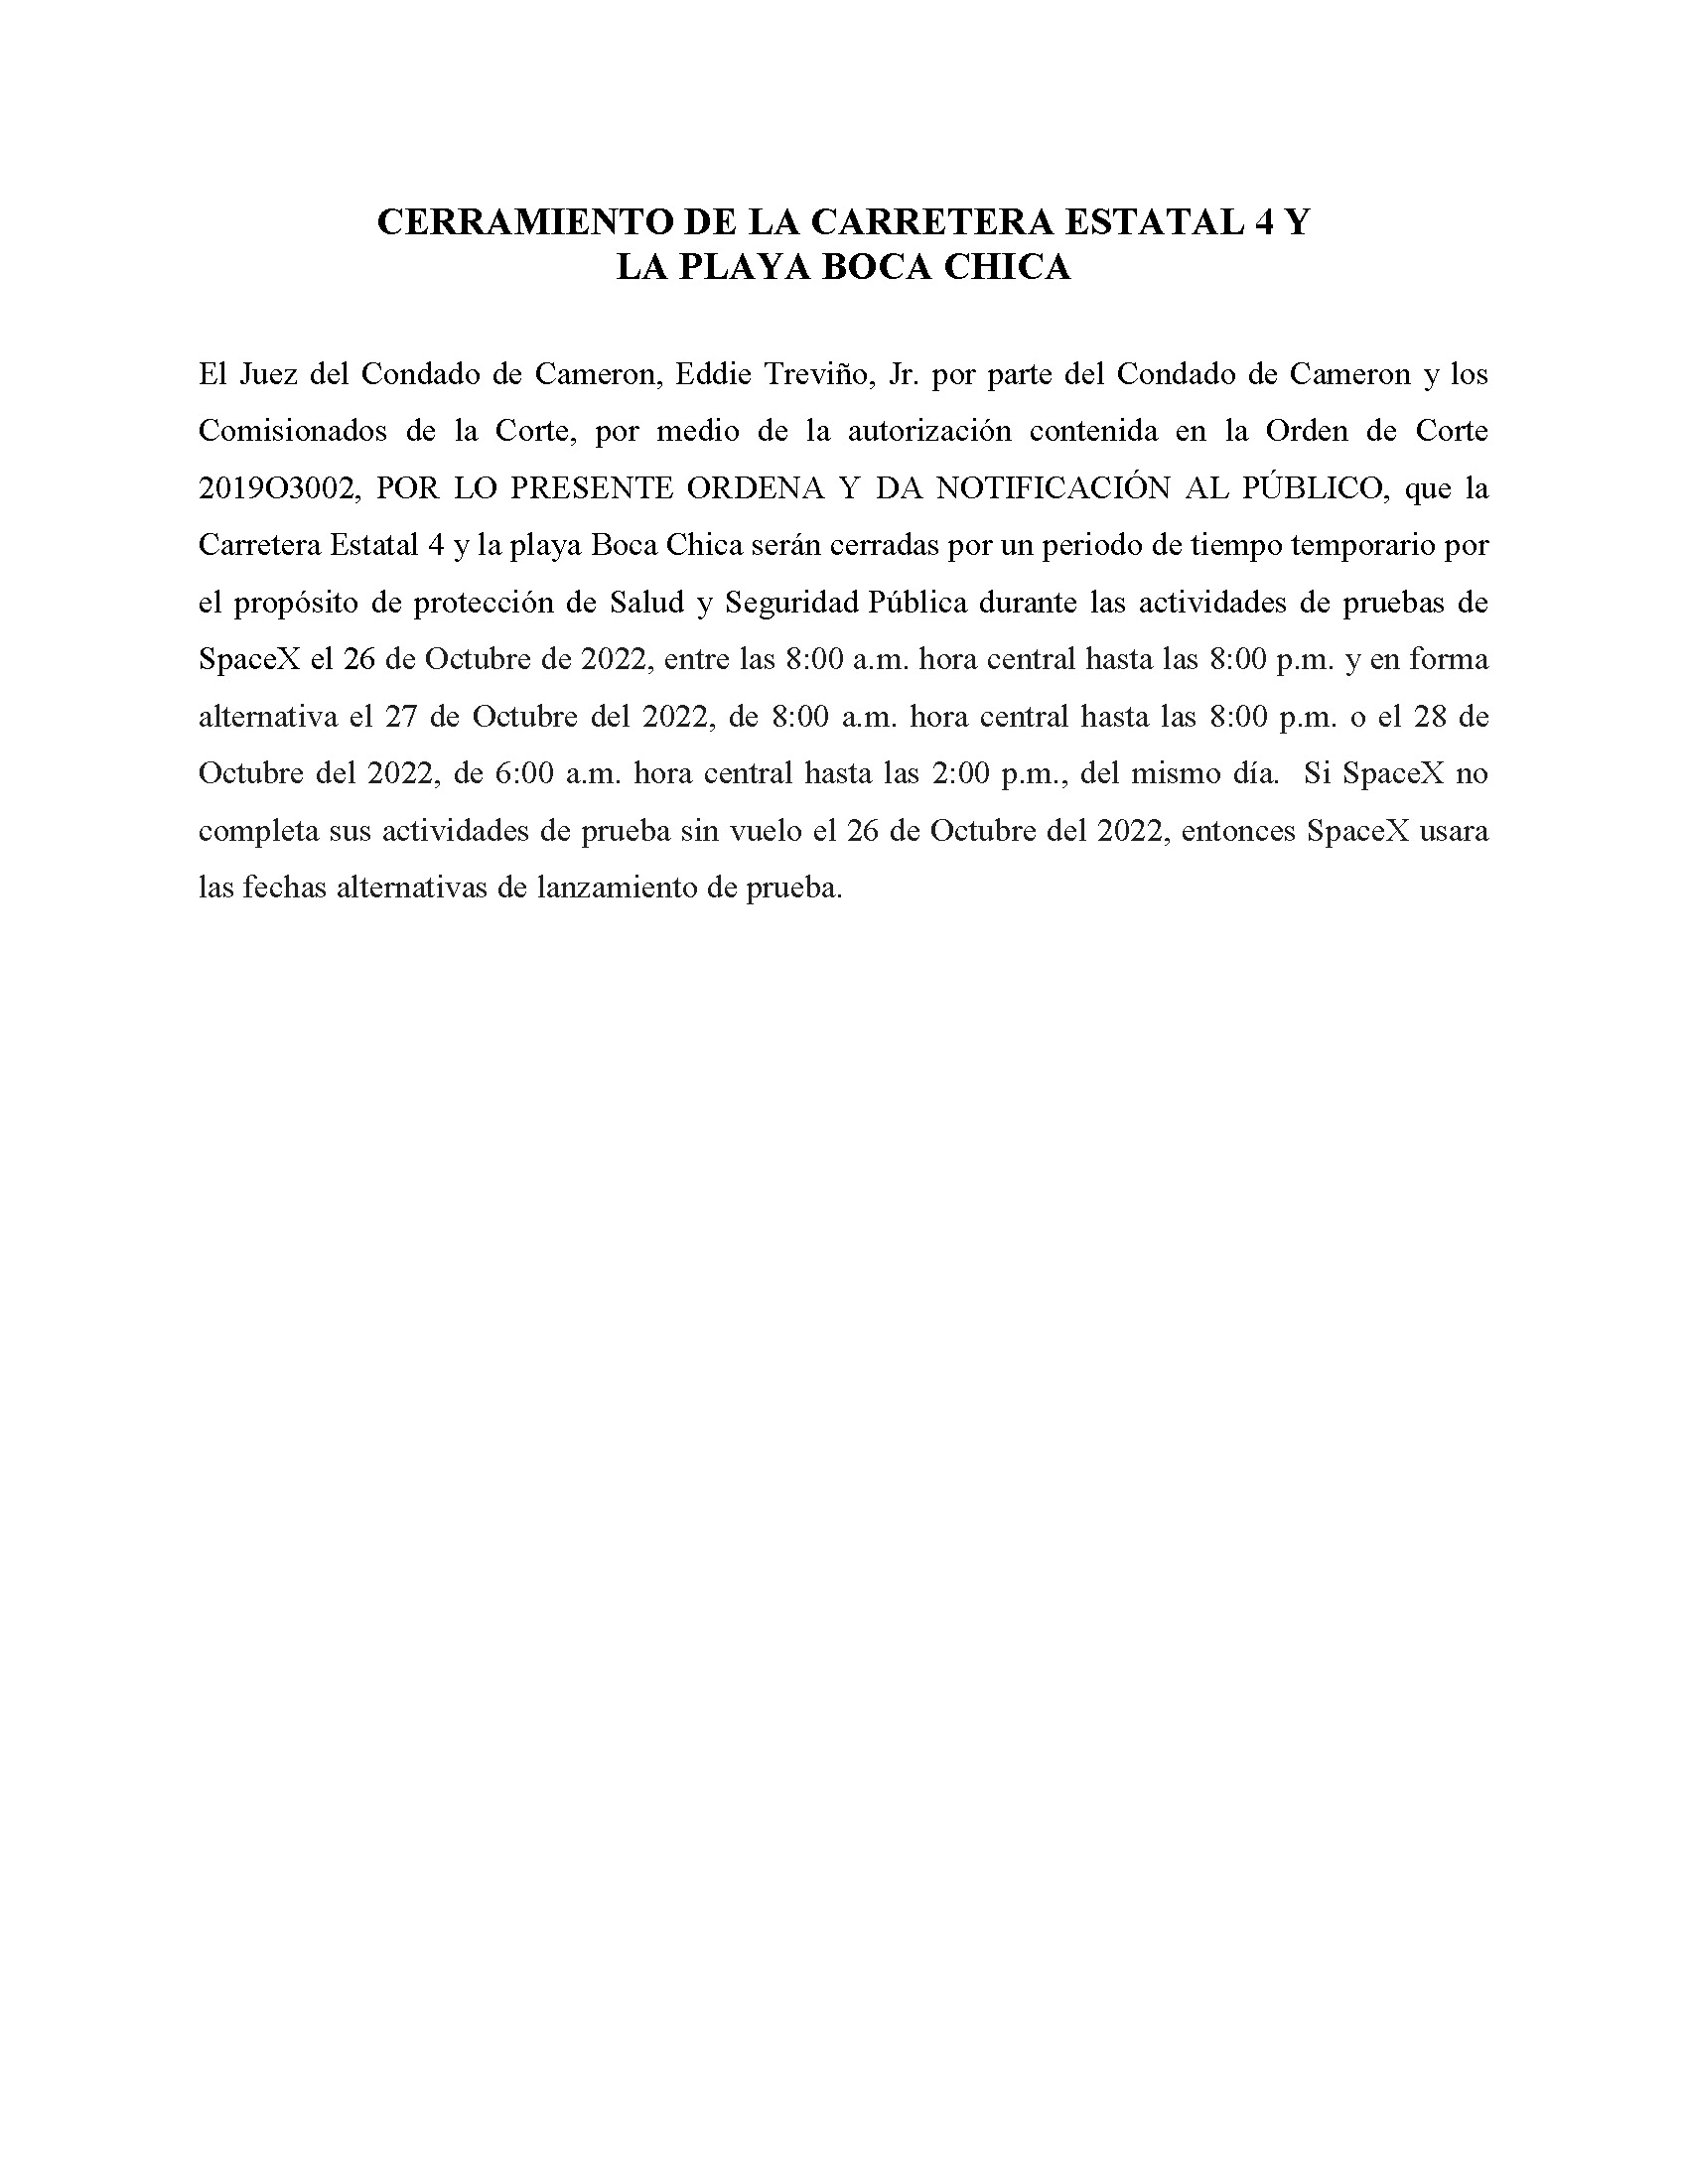 ORDER.CLOSURE OF HIGHWAY 4 Y LA PLAYA BOCA CHICA.SPANISH.10.26.2022